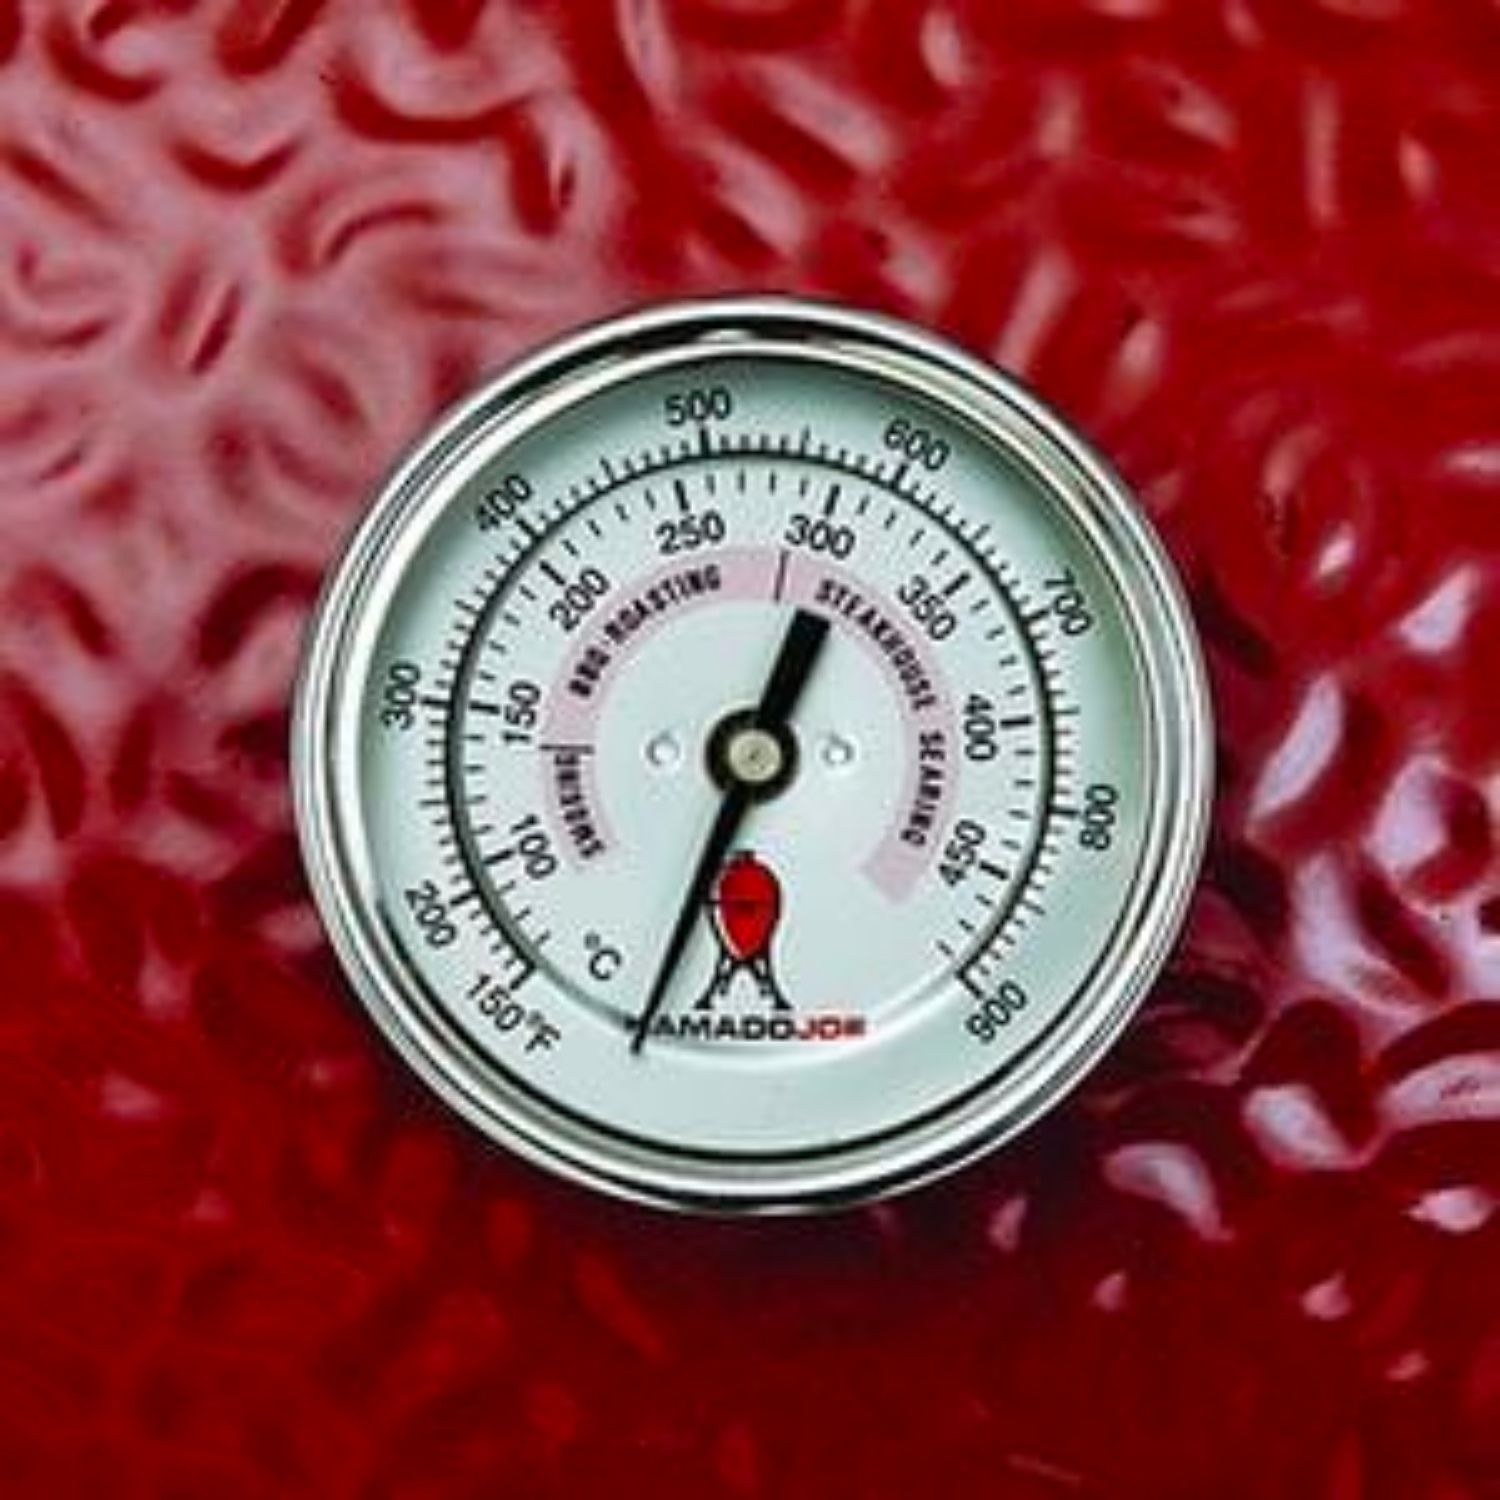 Thermomètre (Classic et Big Joe) – Kamado Joe